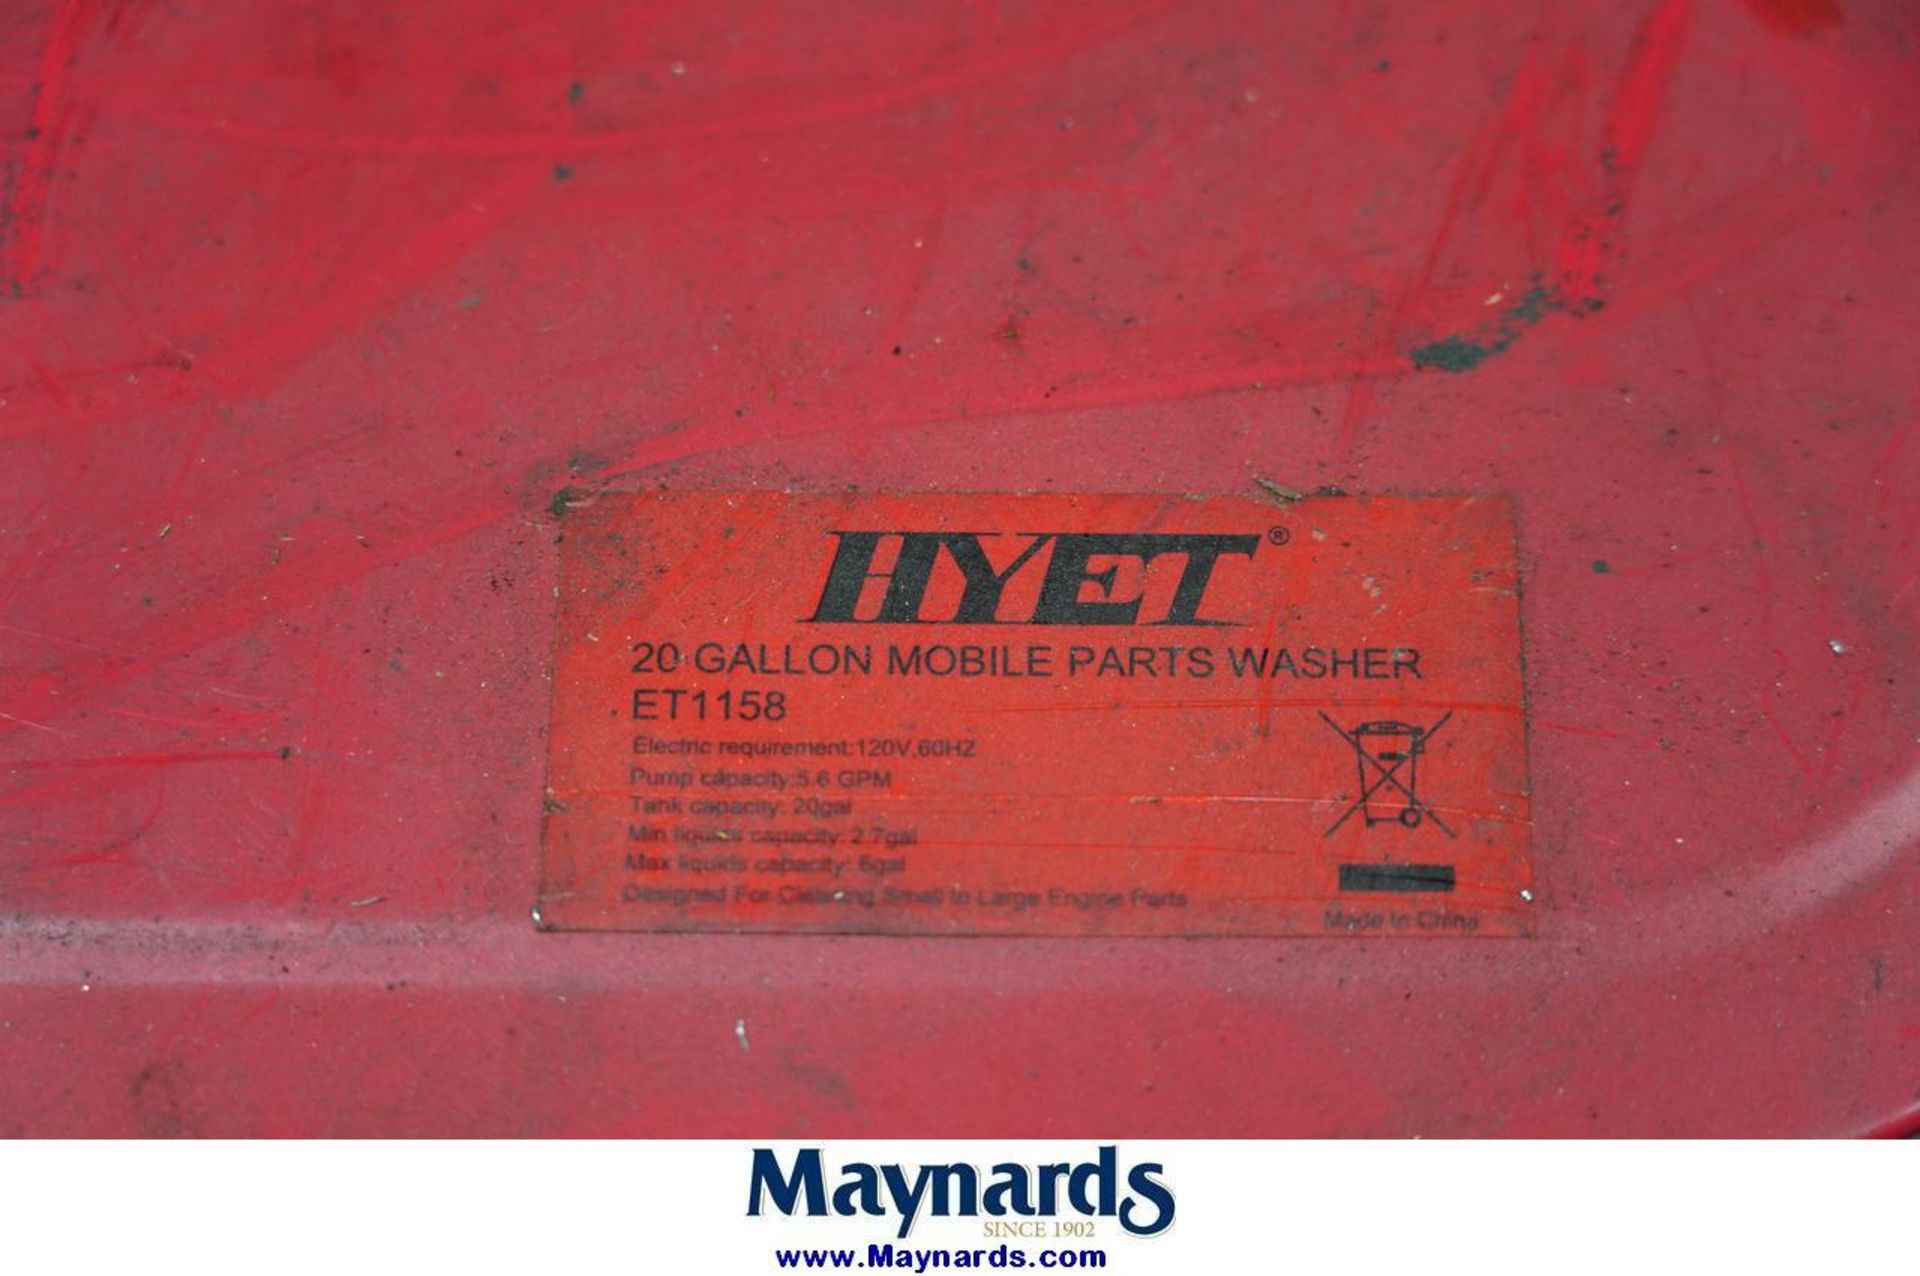 Hyet ET1158 Mobile Parts Washer - Image 3 of 3